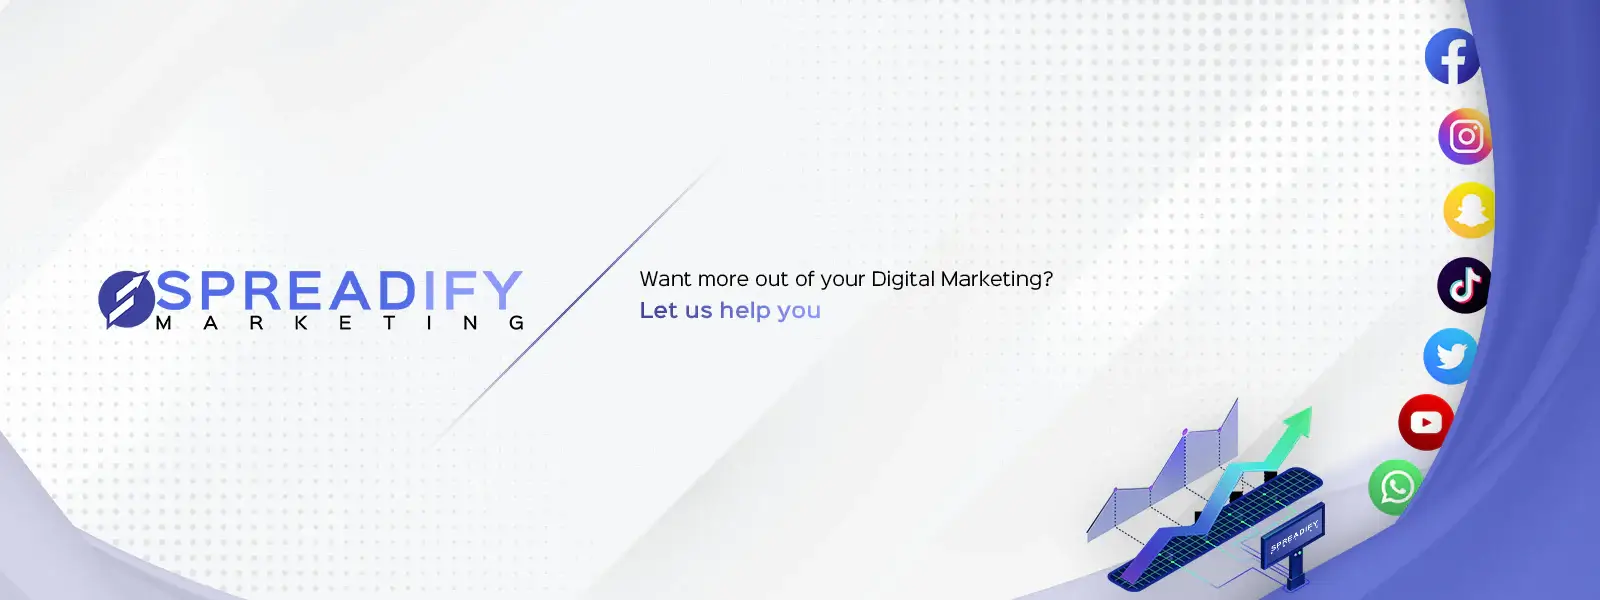 Spreadify Marketing Website Design Banner 1